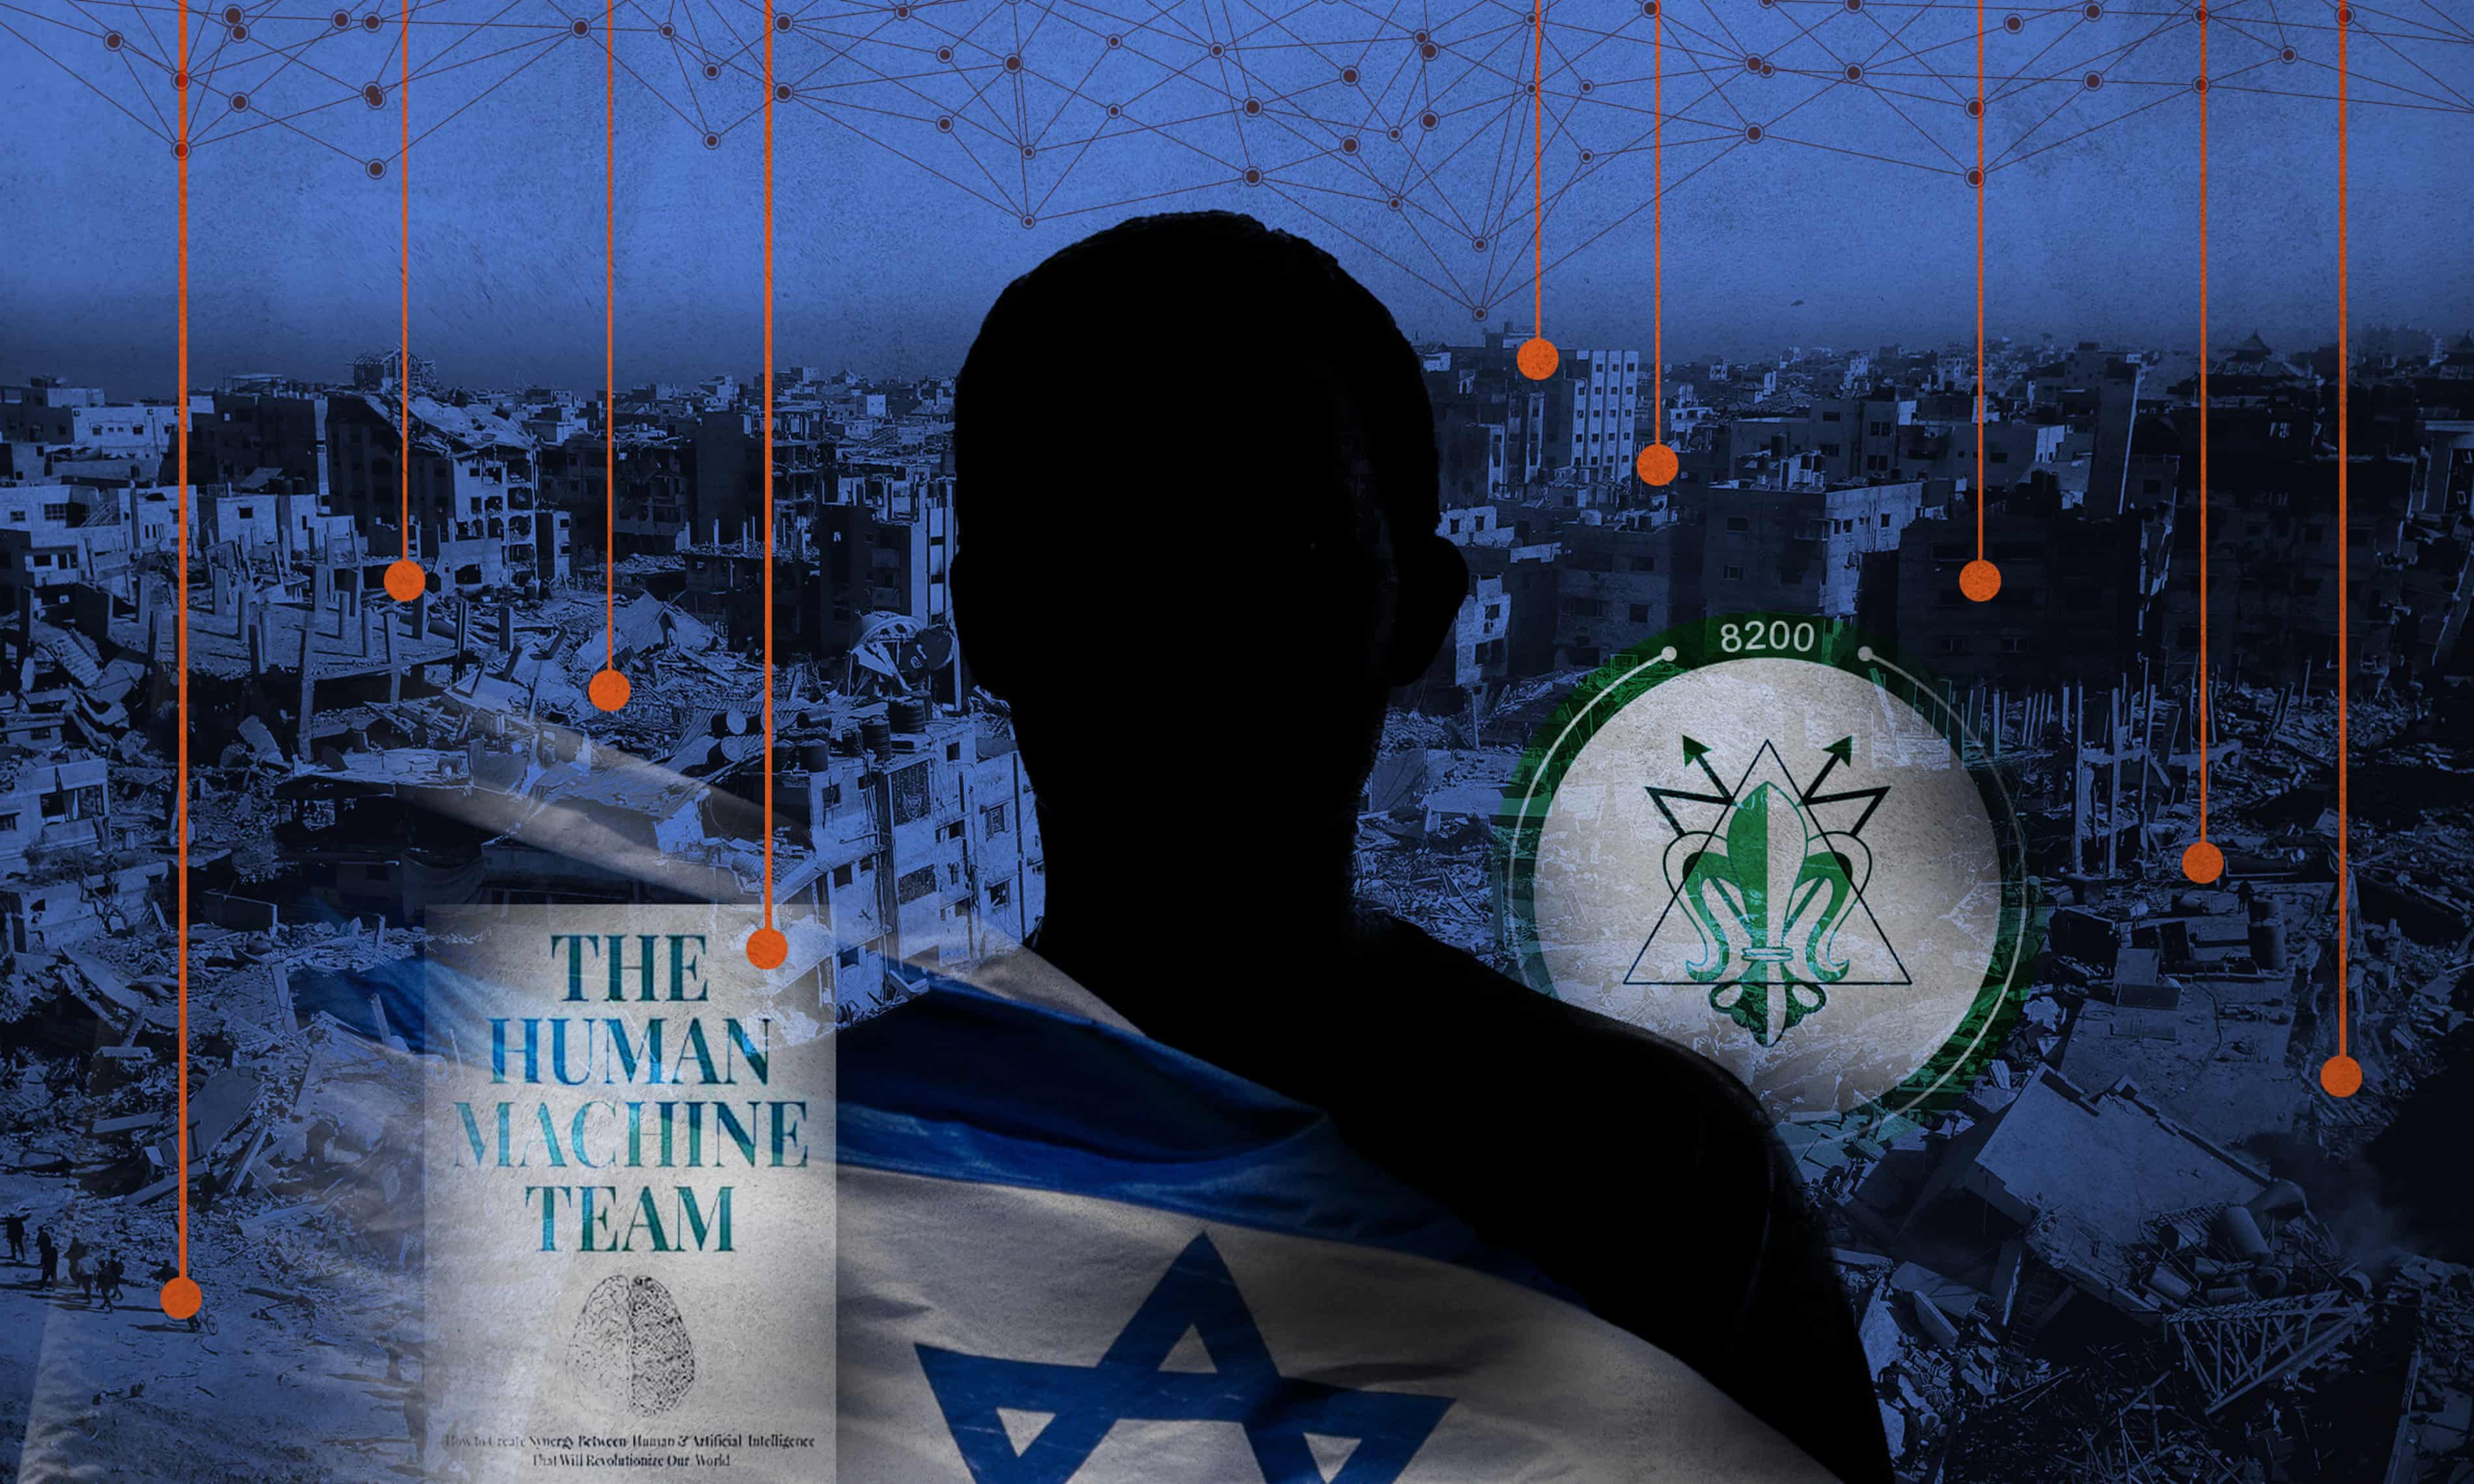 Top Israeli spy chief exposes his true identity in online security lapse (theguardian.com)